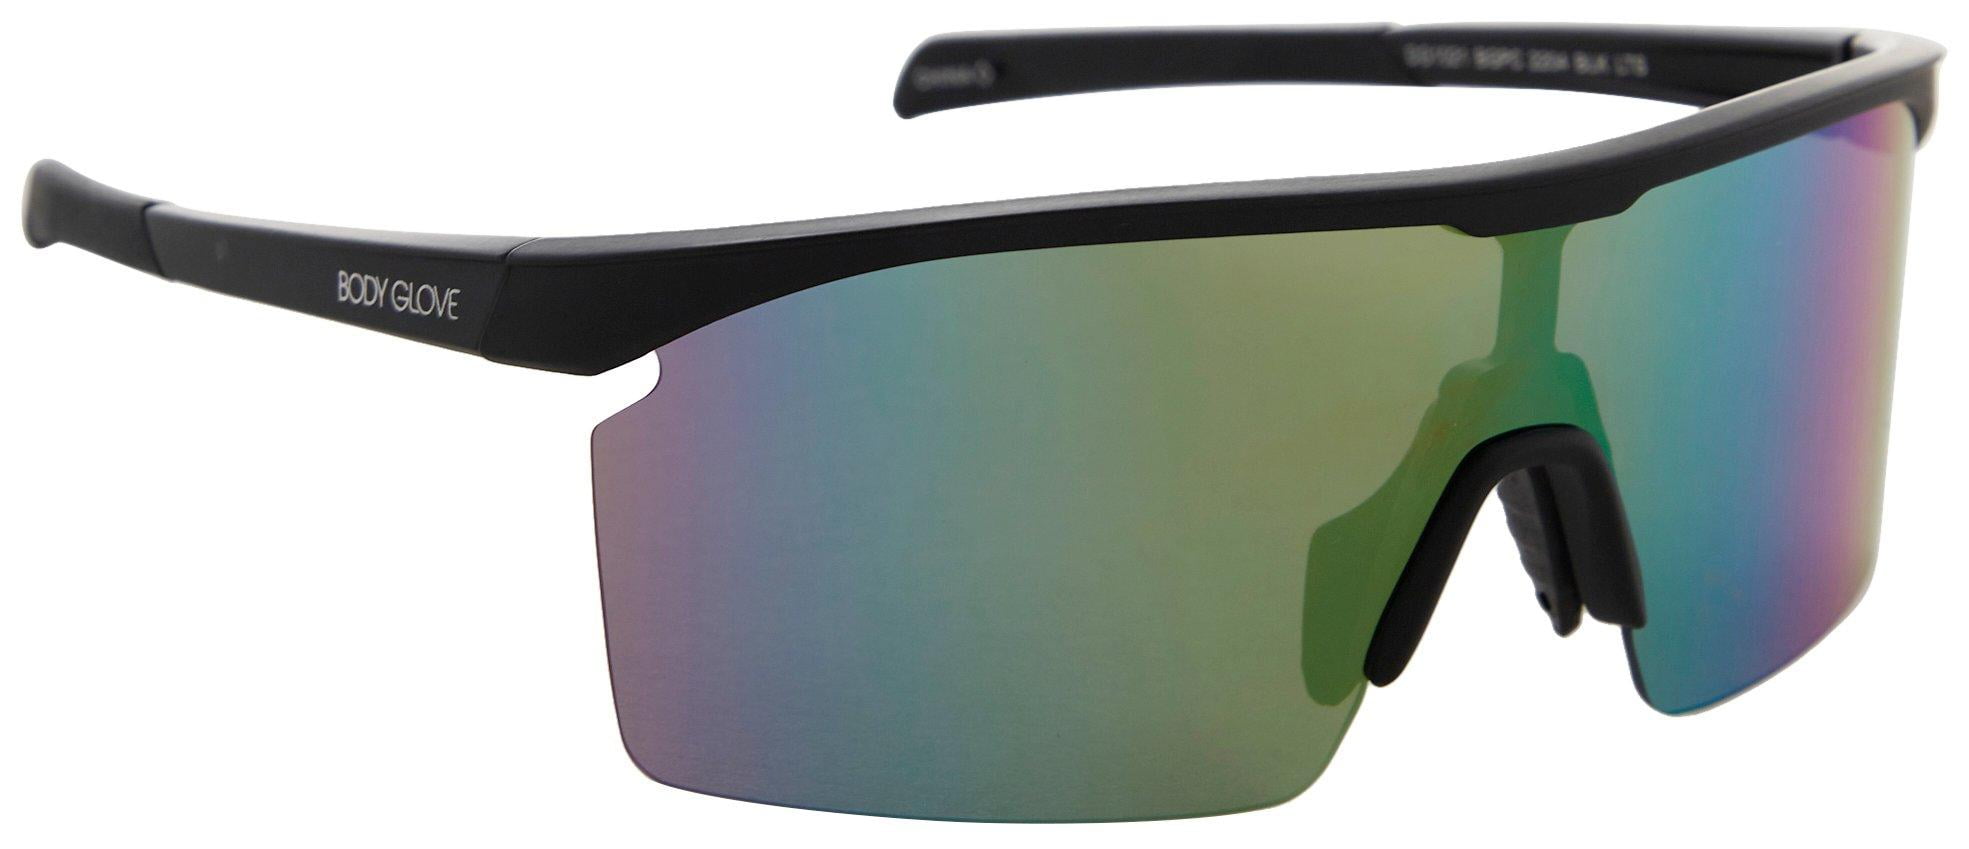 Sunglasses Polarised White Frame Smokey Grey Lens Bodyglove Palm Beach 